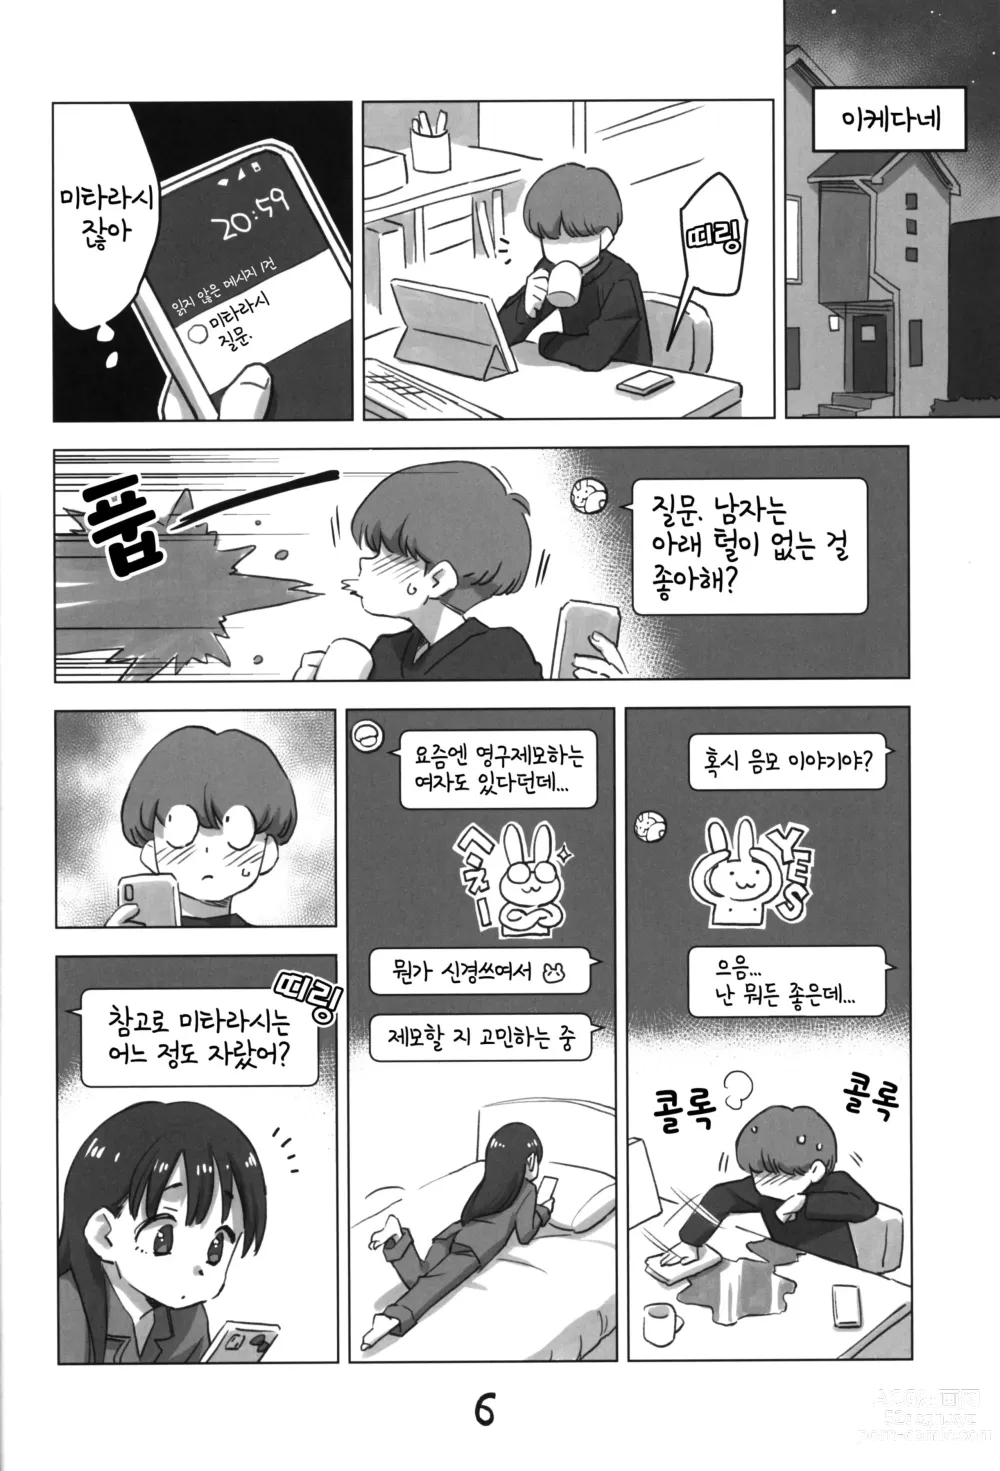 Page 5 of doujinshi 미타라시, 제모하다.